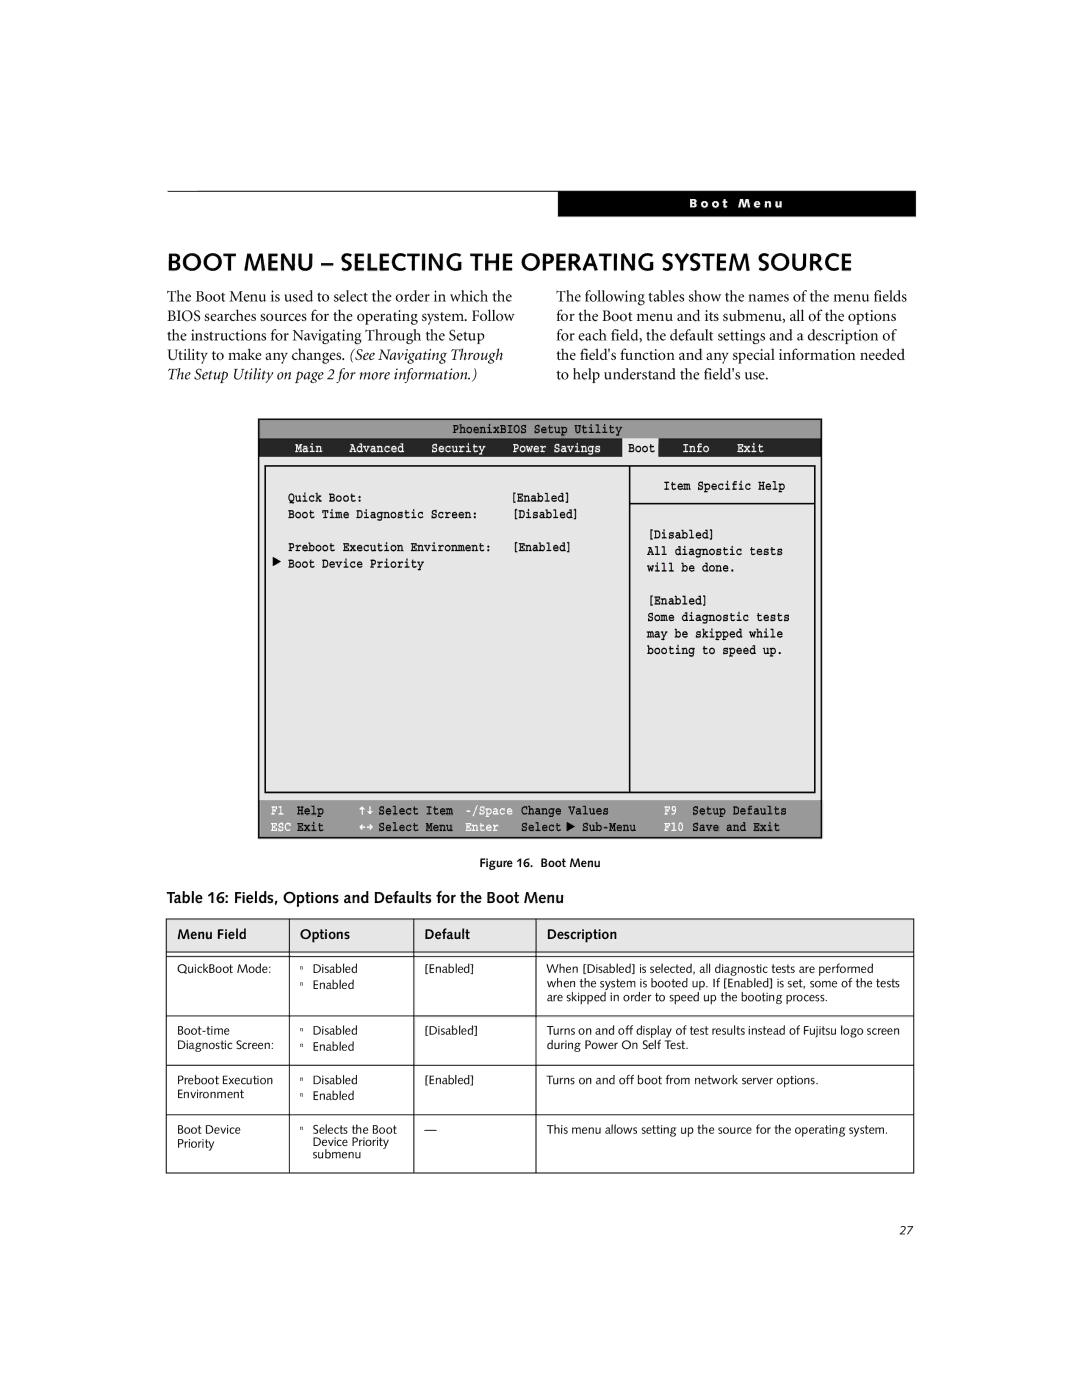 Fujitsu Siemens Computers C2110 manual Boot Menu Selecting the Operating System Source 